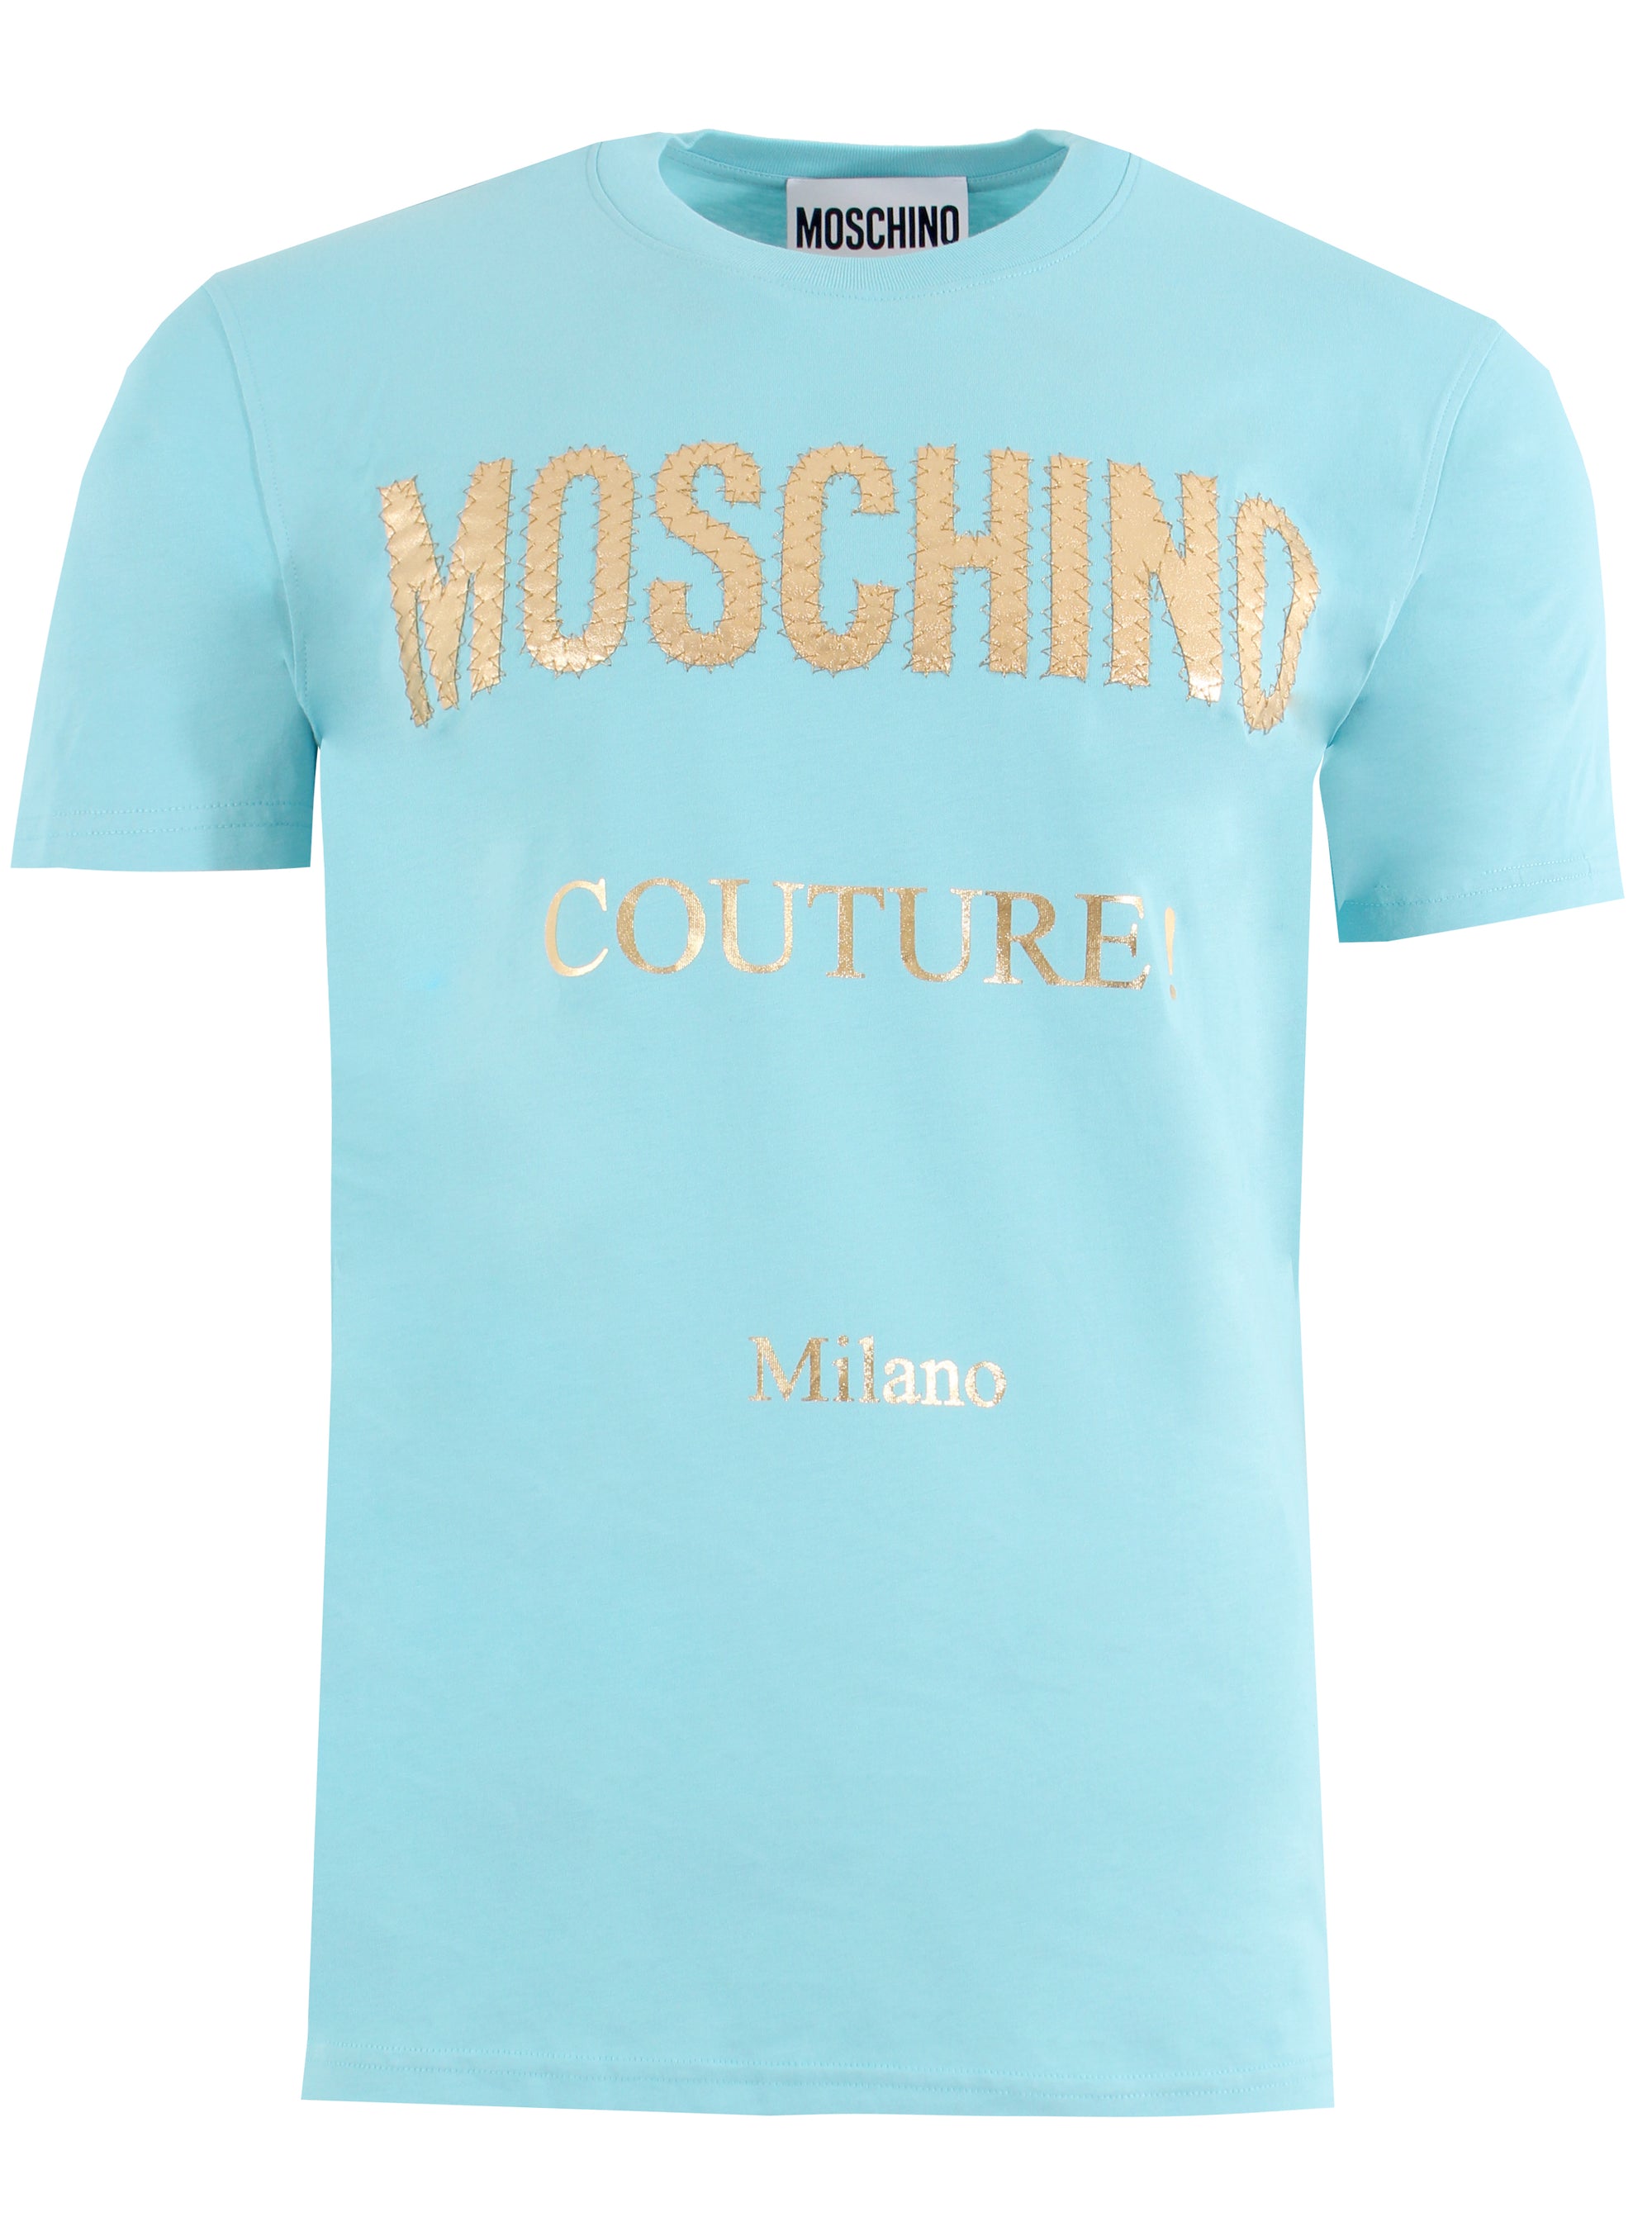 Moschino Couture Logo Tee - Blue